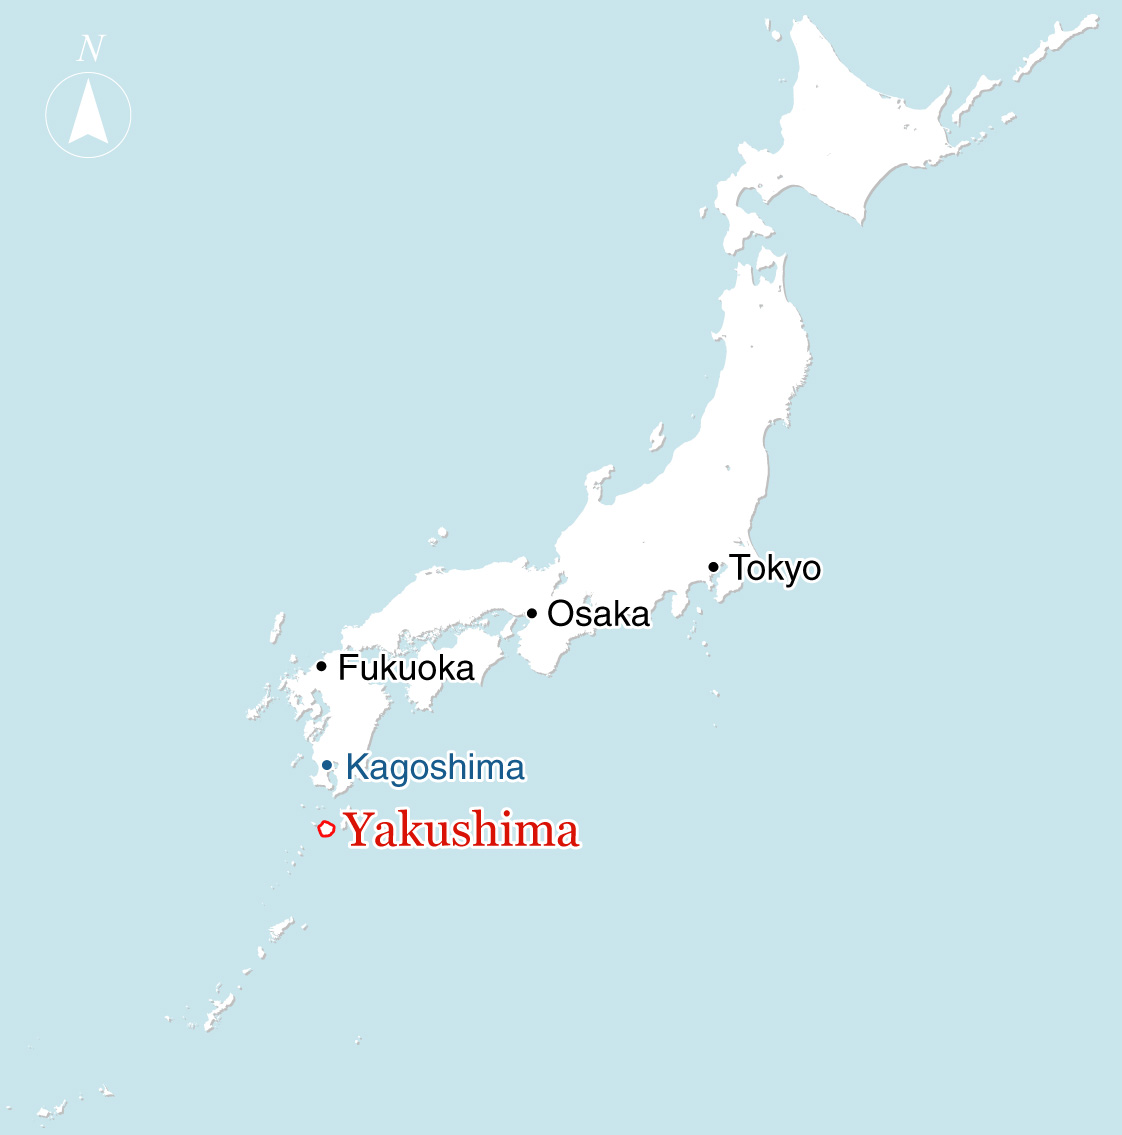 Where in Japan is Yakushima?